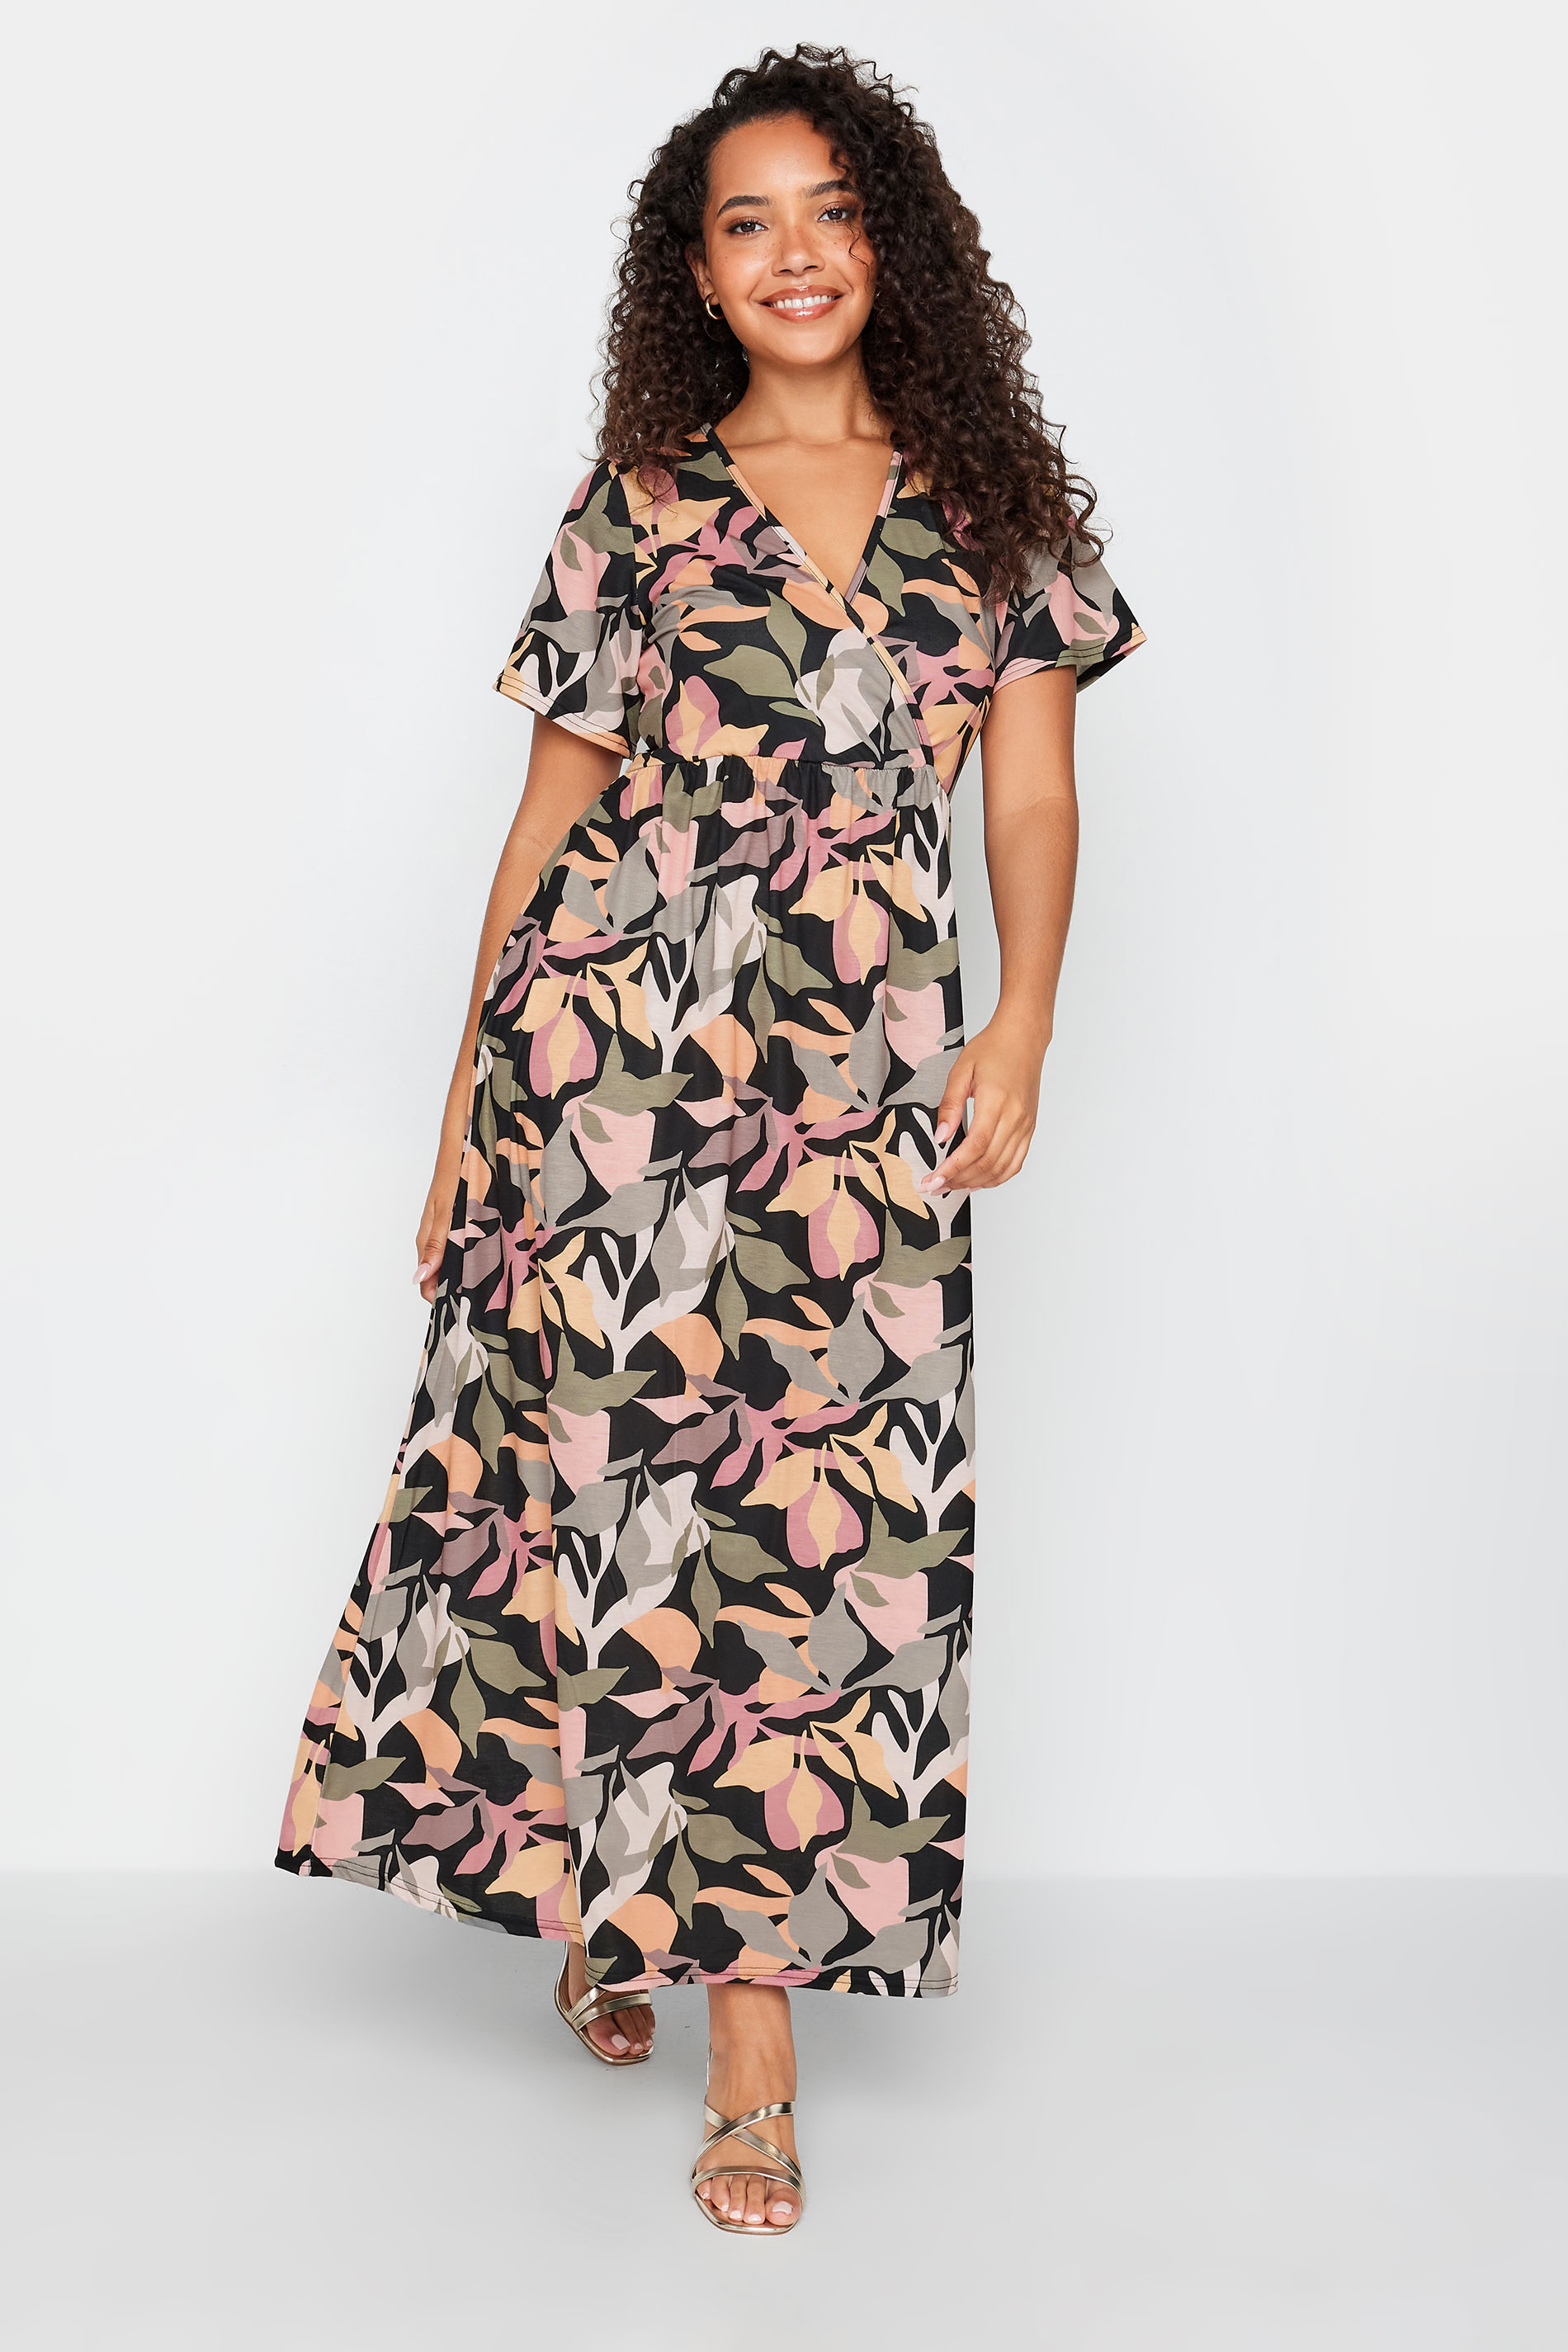 M&Co Black Tropical Print Maxi Dress | M&Co  2